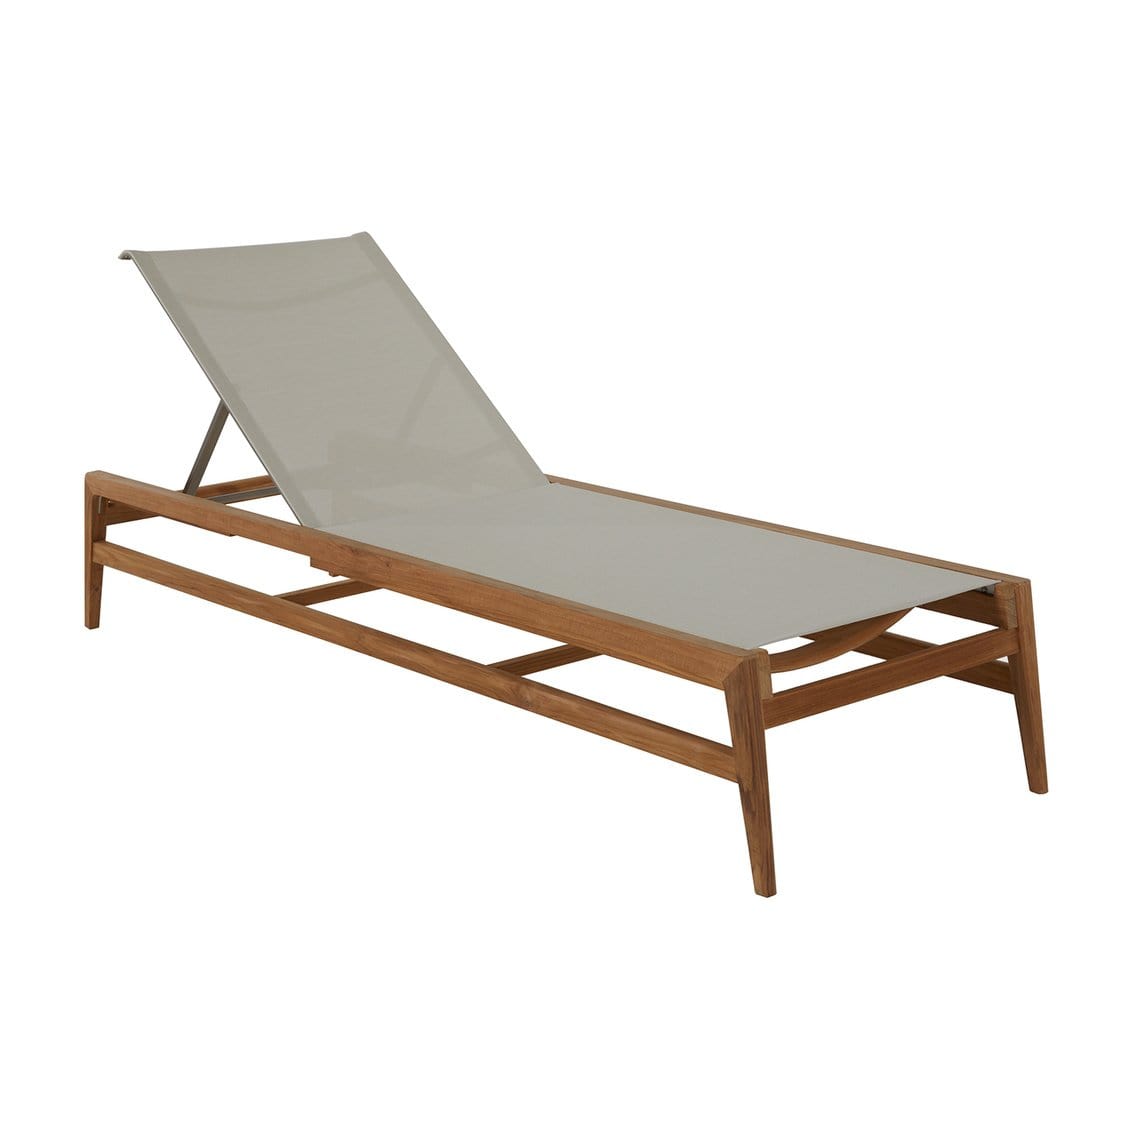 Summer Classics Coast Chaise Lounge Chair Furniture summer-classics-27334